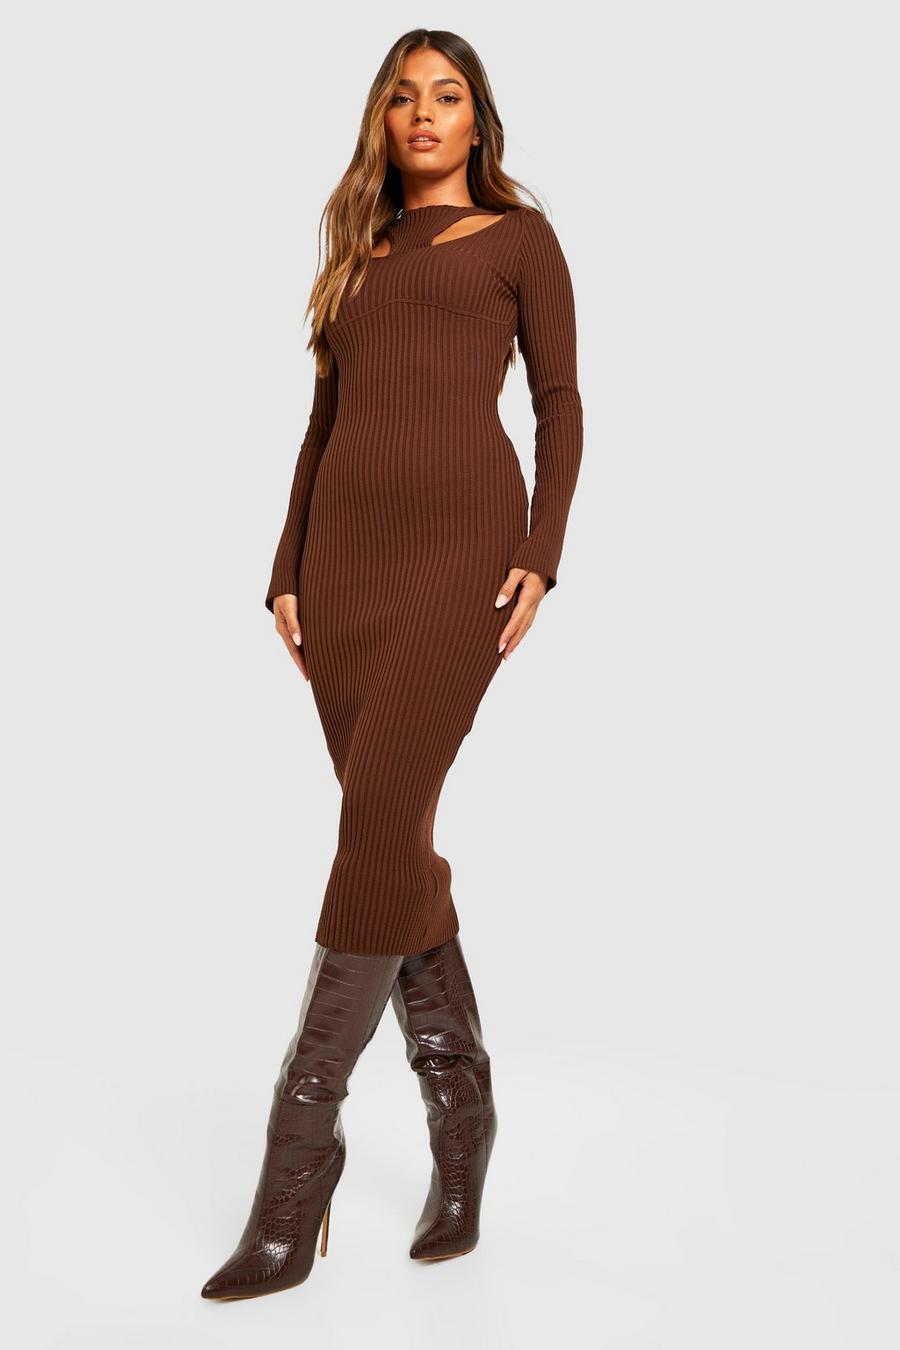 Chocolate marrón Cut Out Neckline Rib Knitted Dress